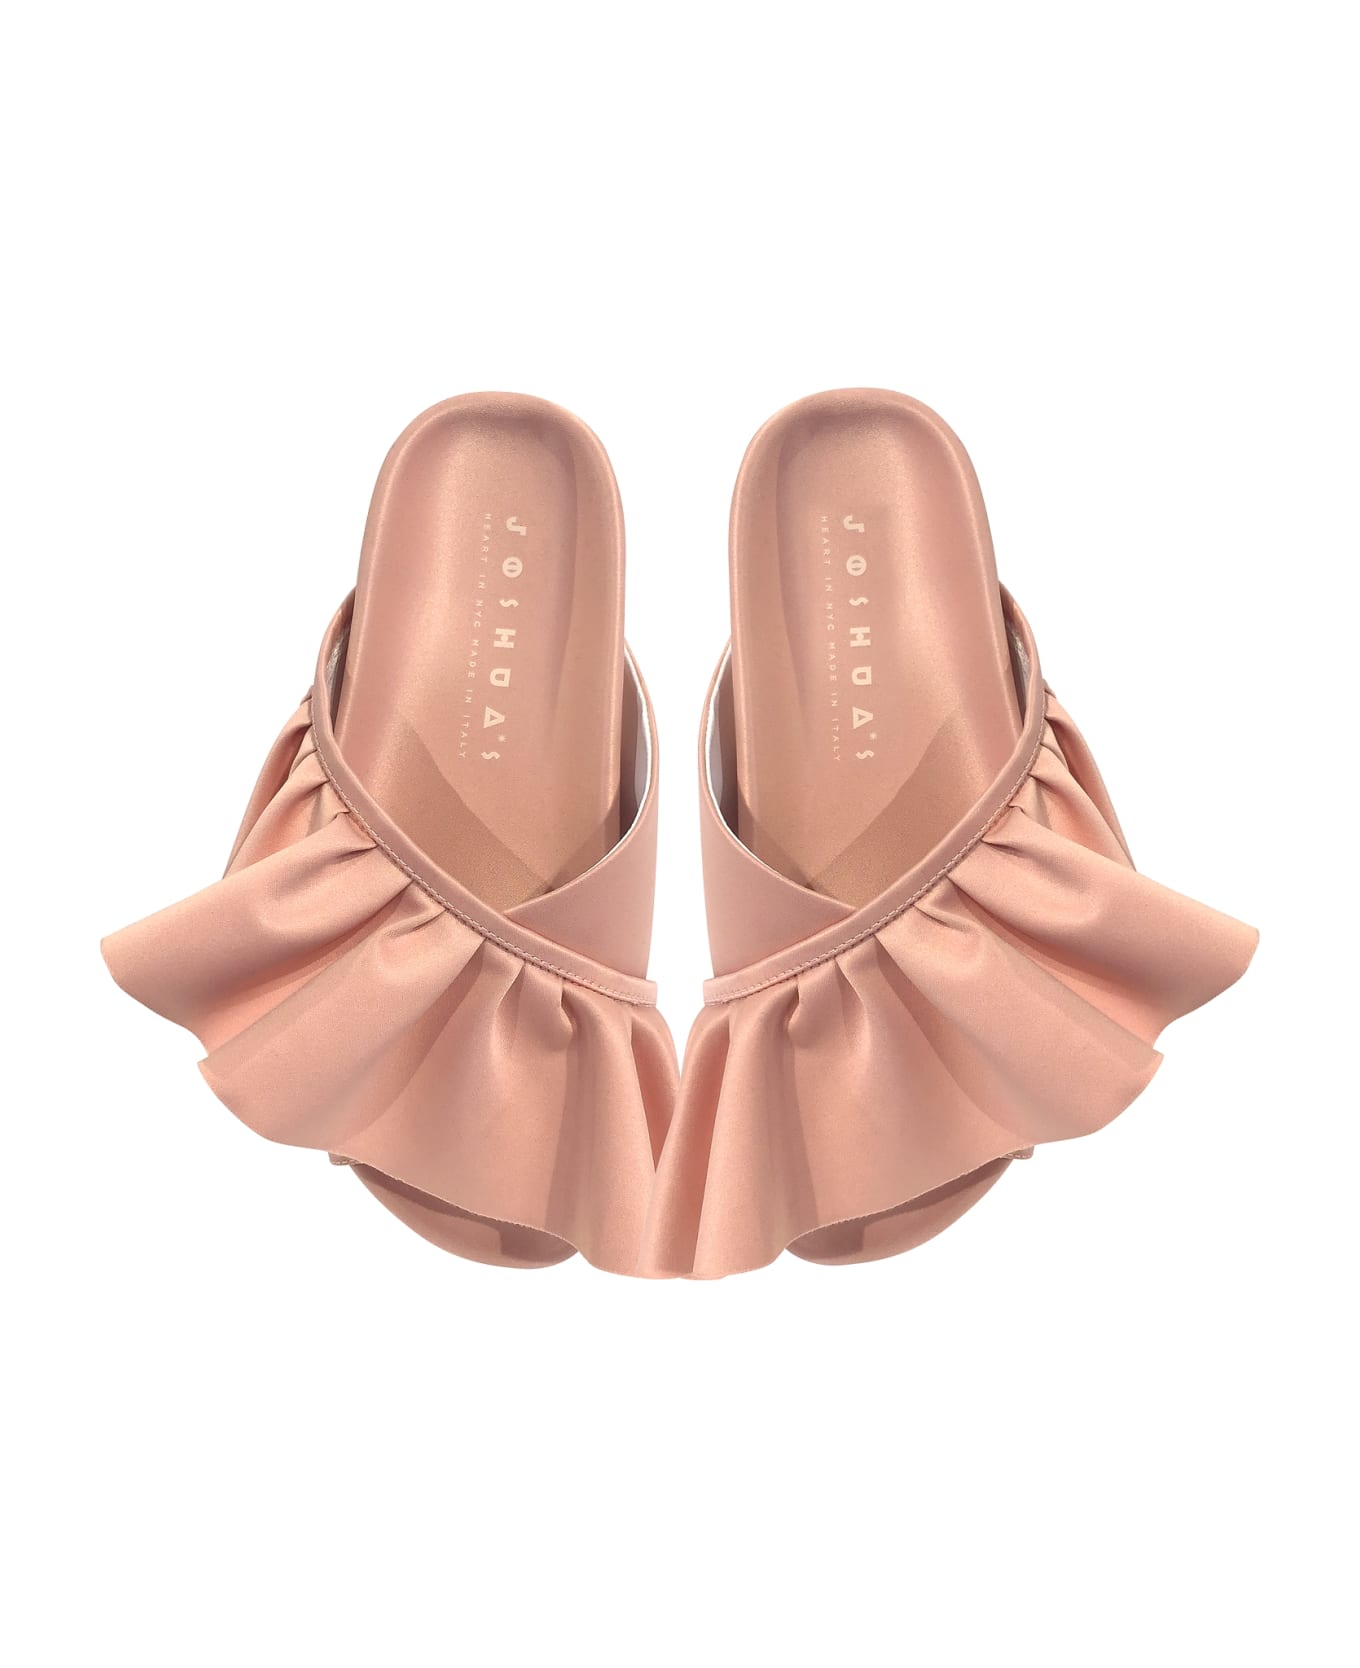 Joshua Sanders Pink Satin Ruffle Slide Sandals - Pink